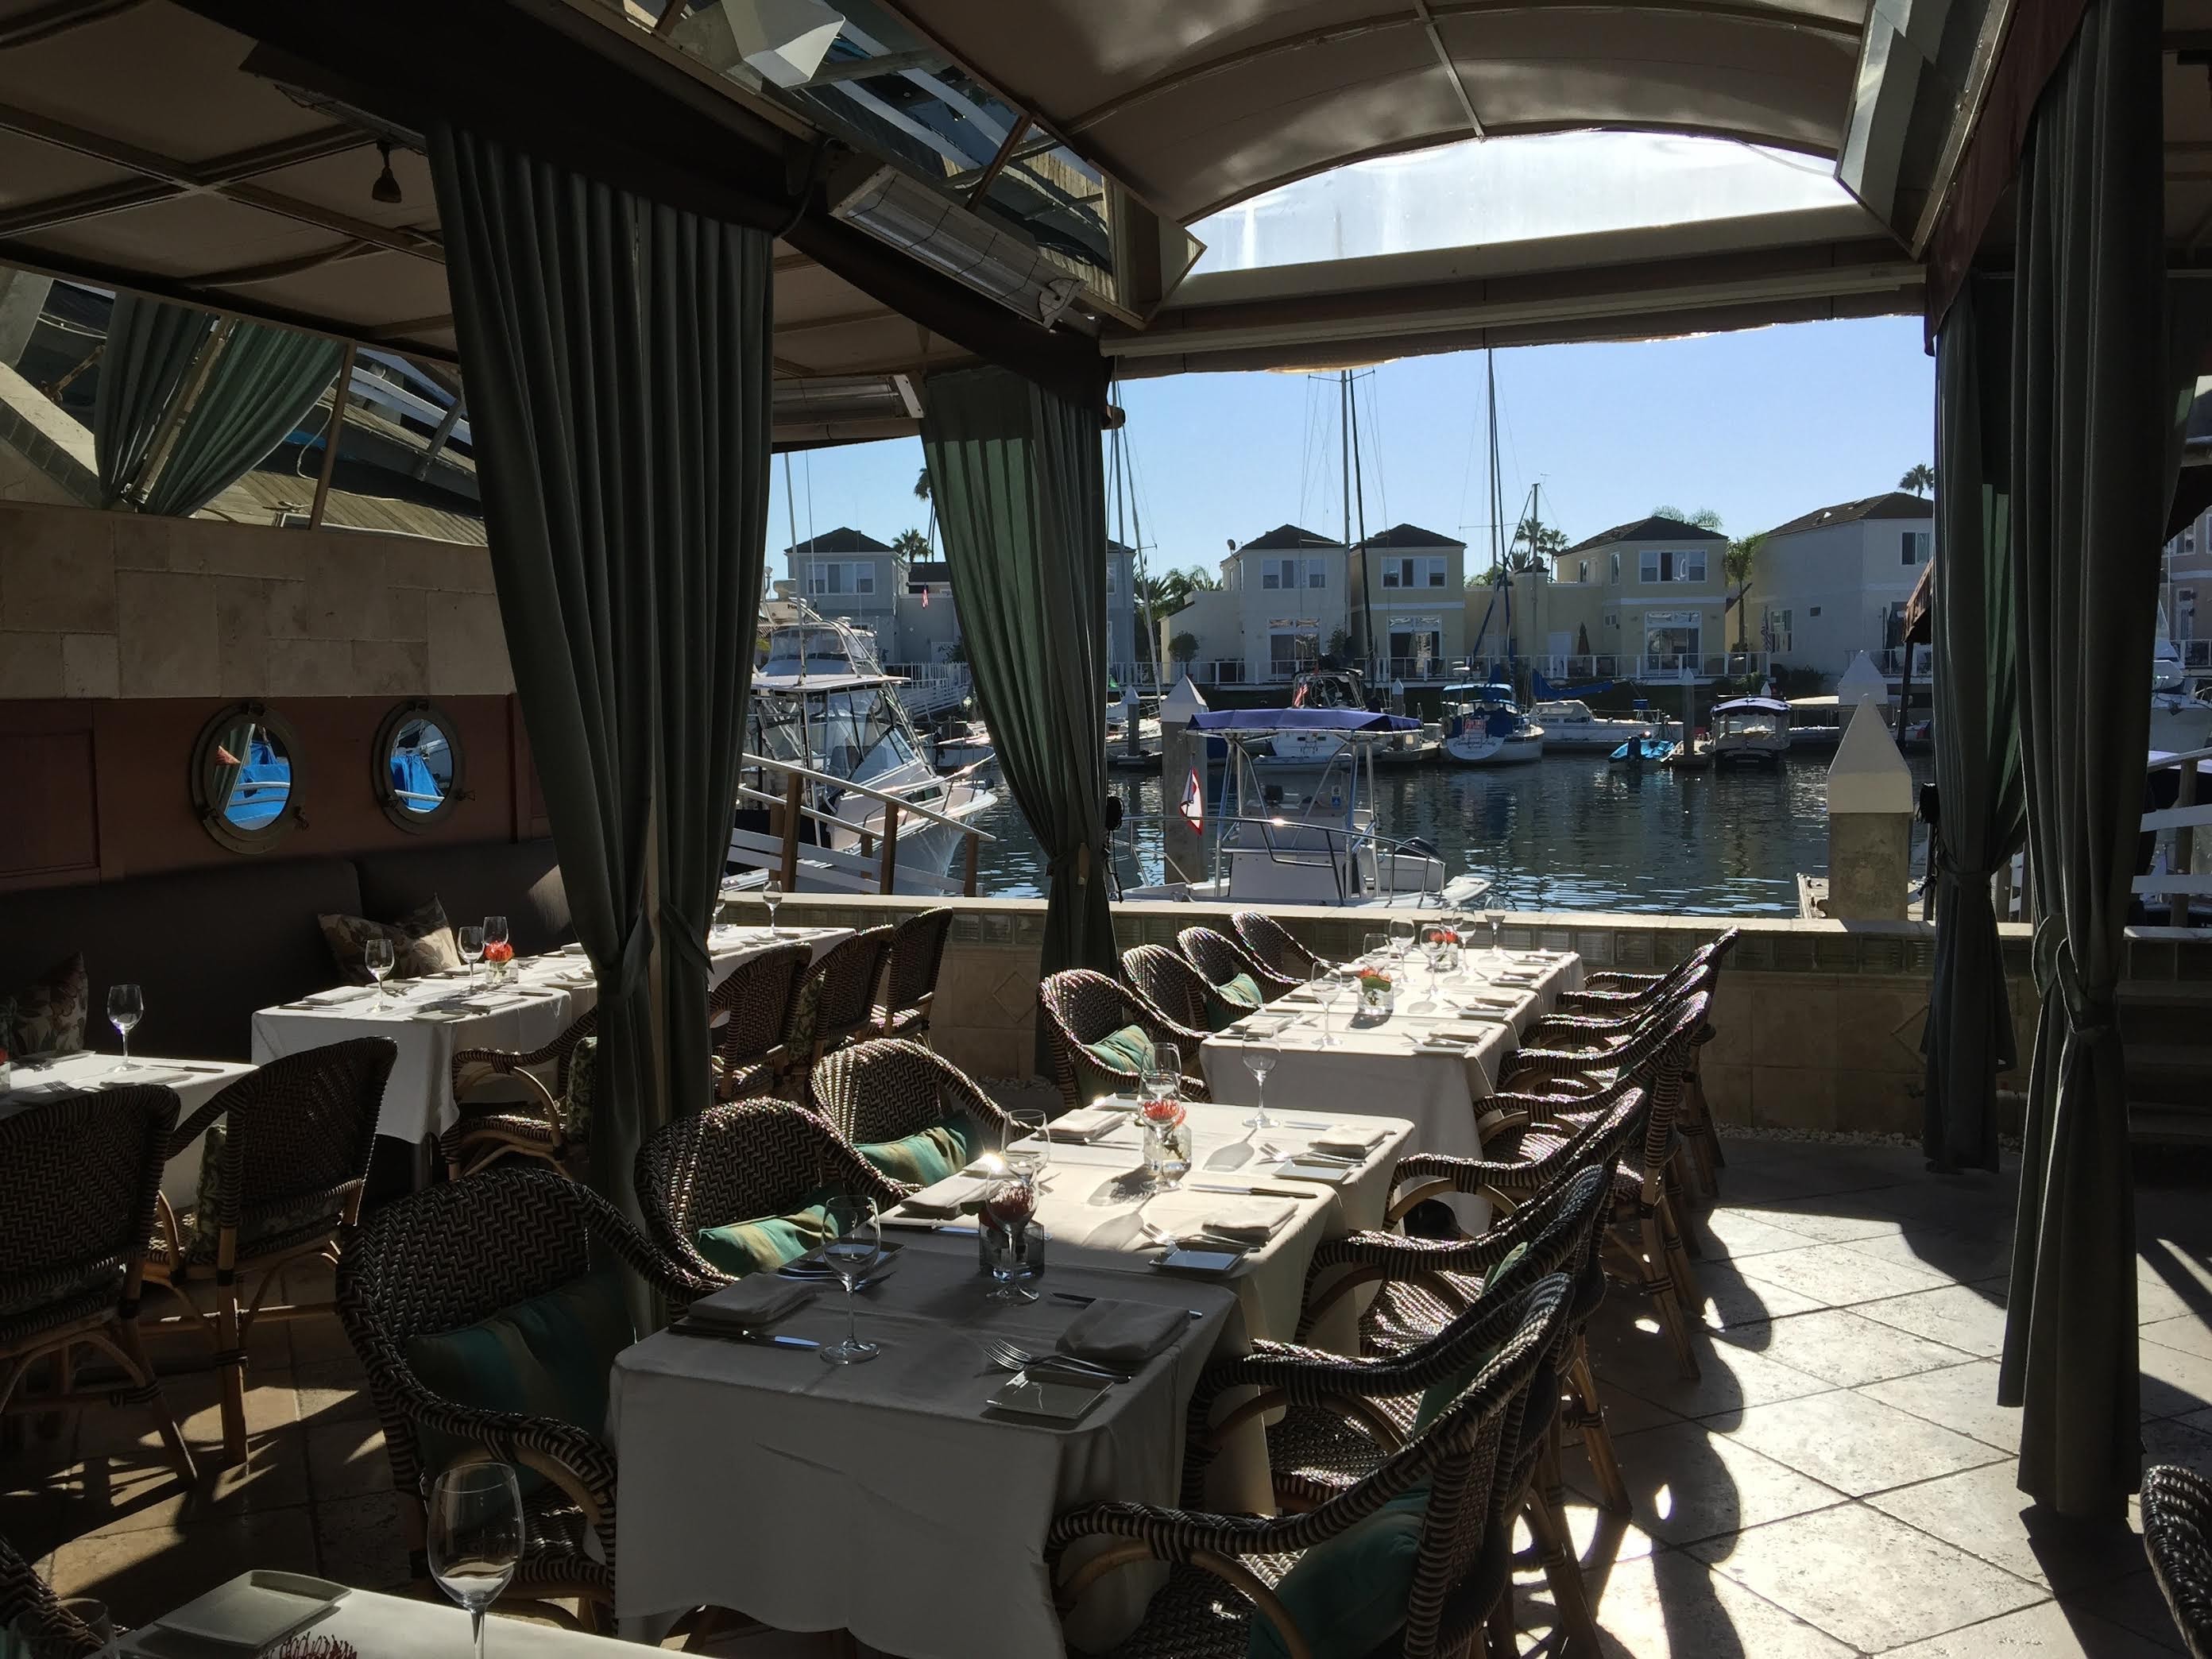 Our Menu Offerings - The Dock - American Restaurant in Newport Beach, CA